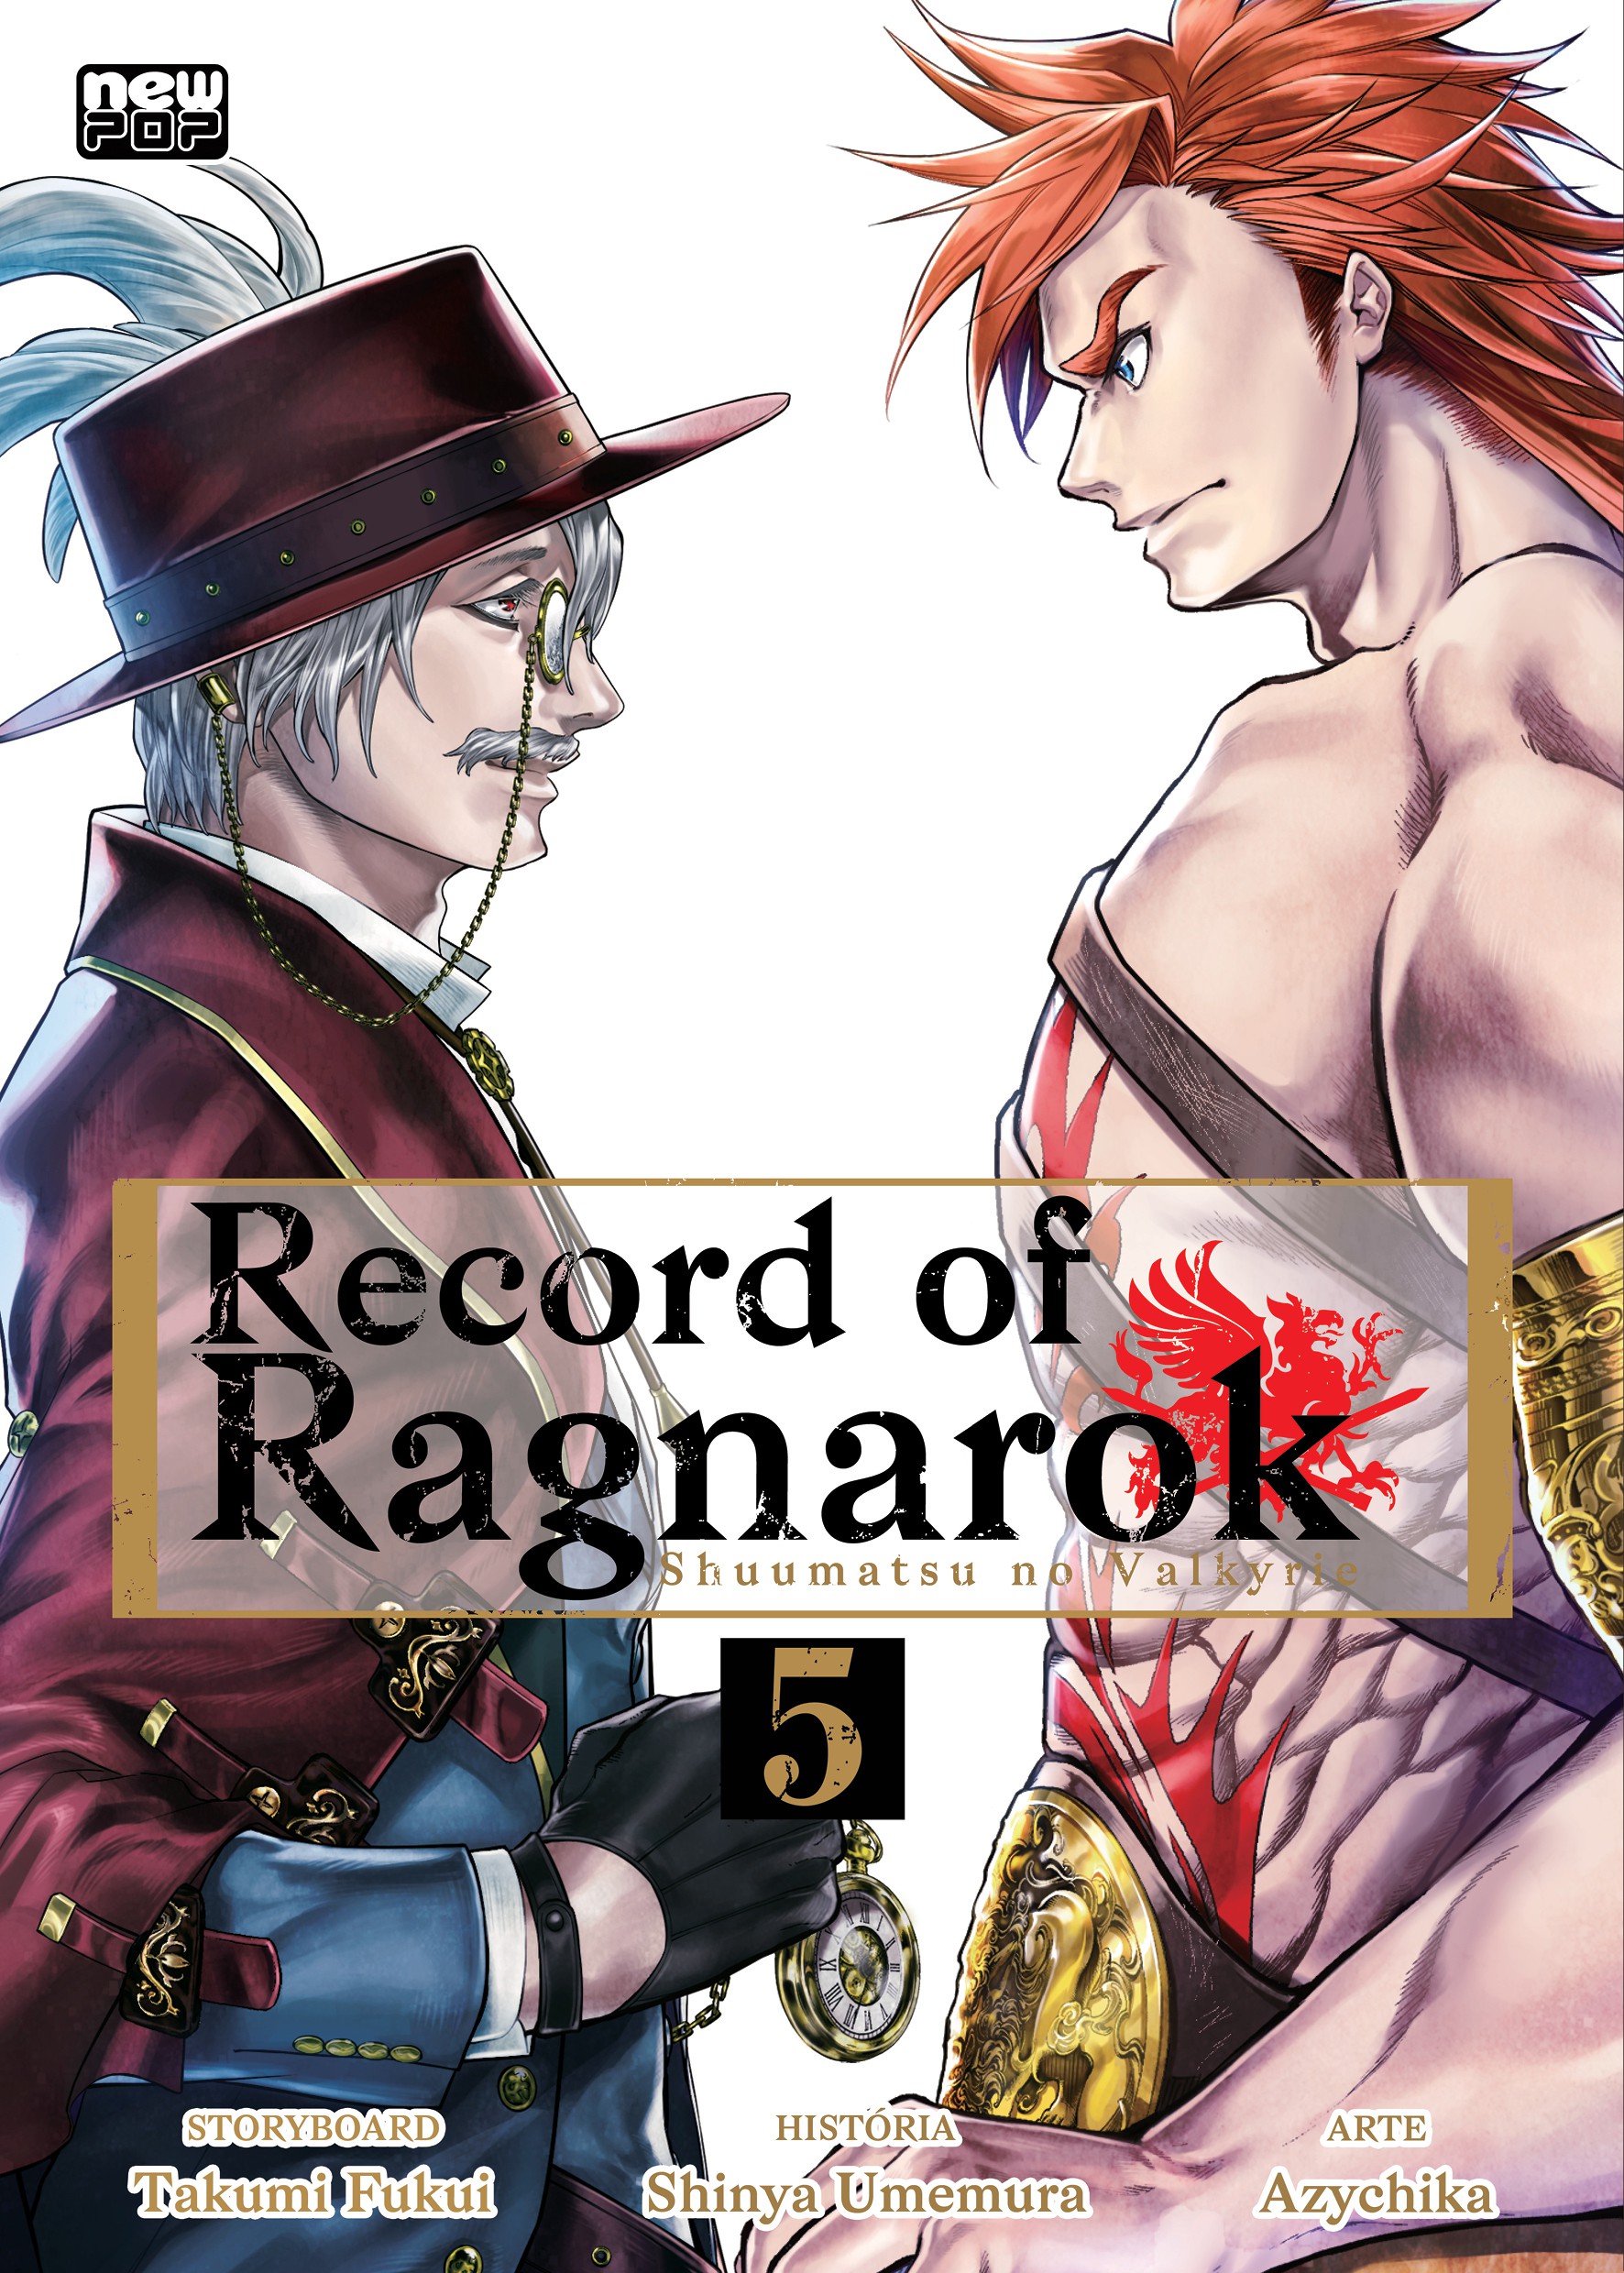 Assistir Record of Ragnarok 2 Online completo